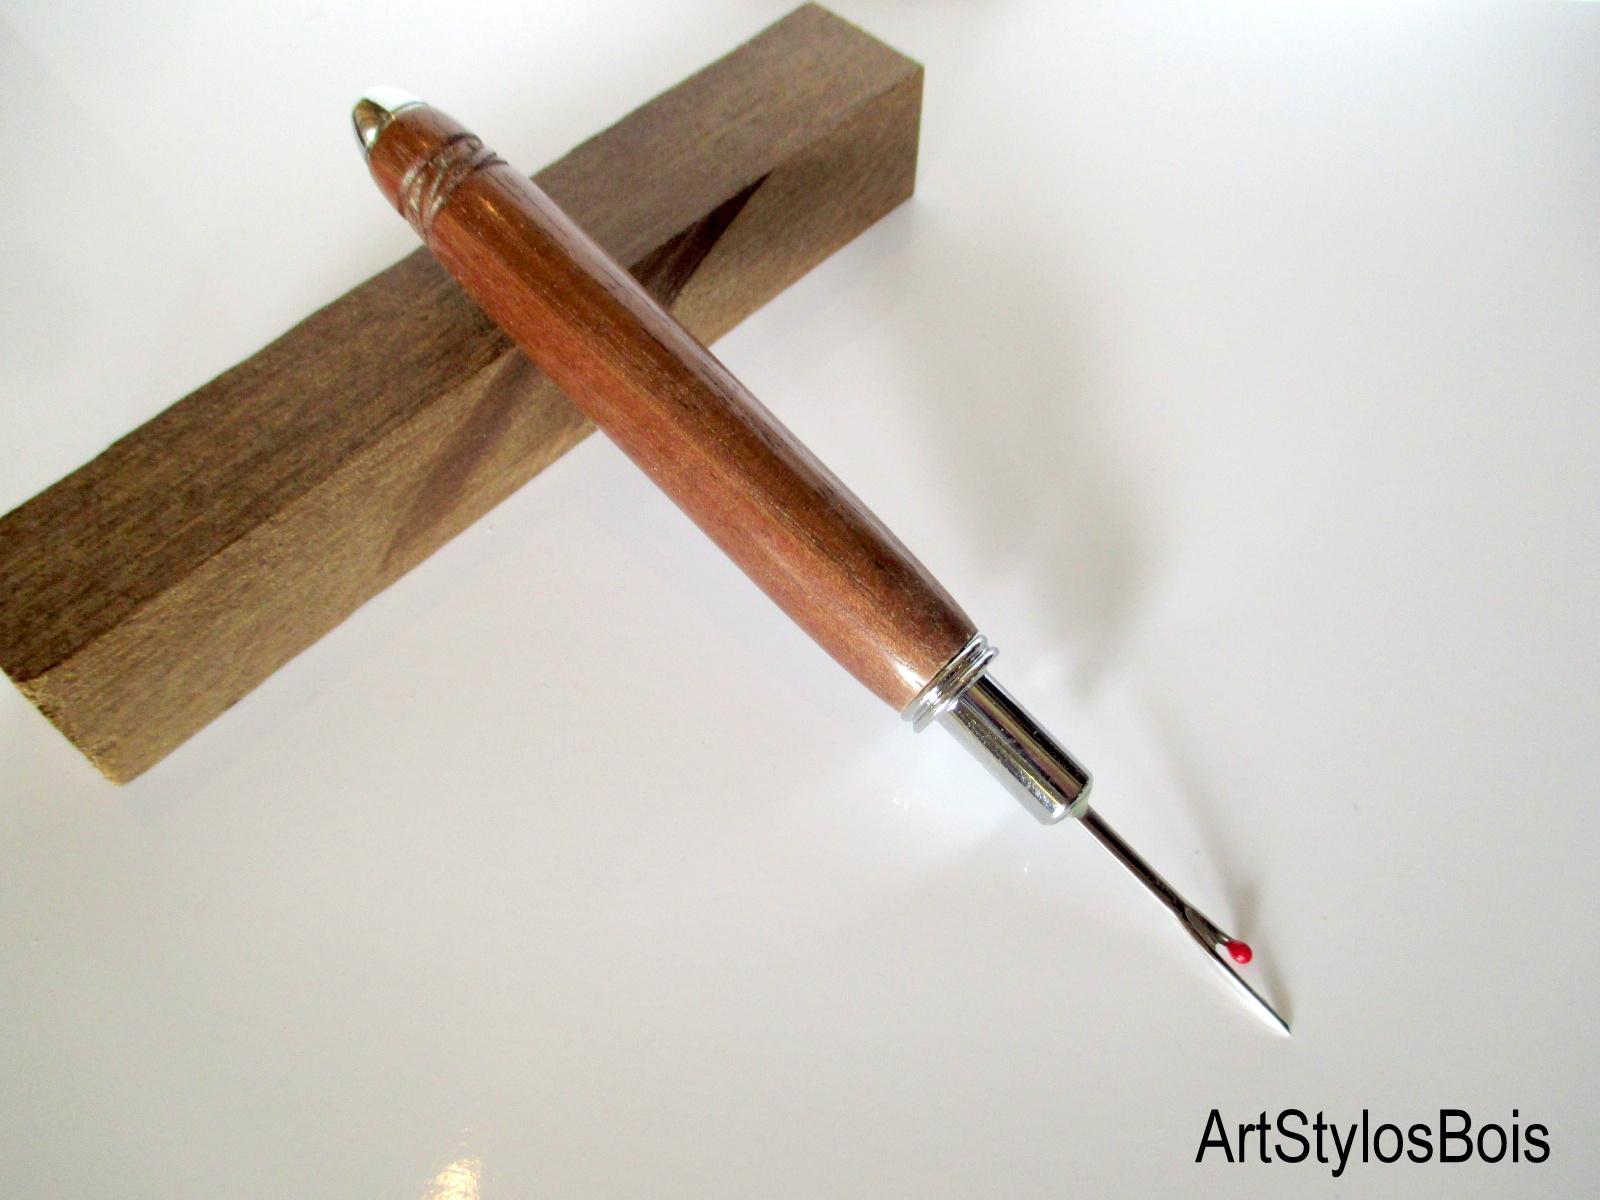 Stylos et objets en bois fabrication artisanale, idée cadeau